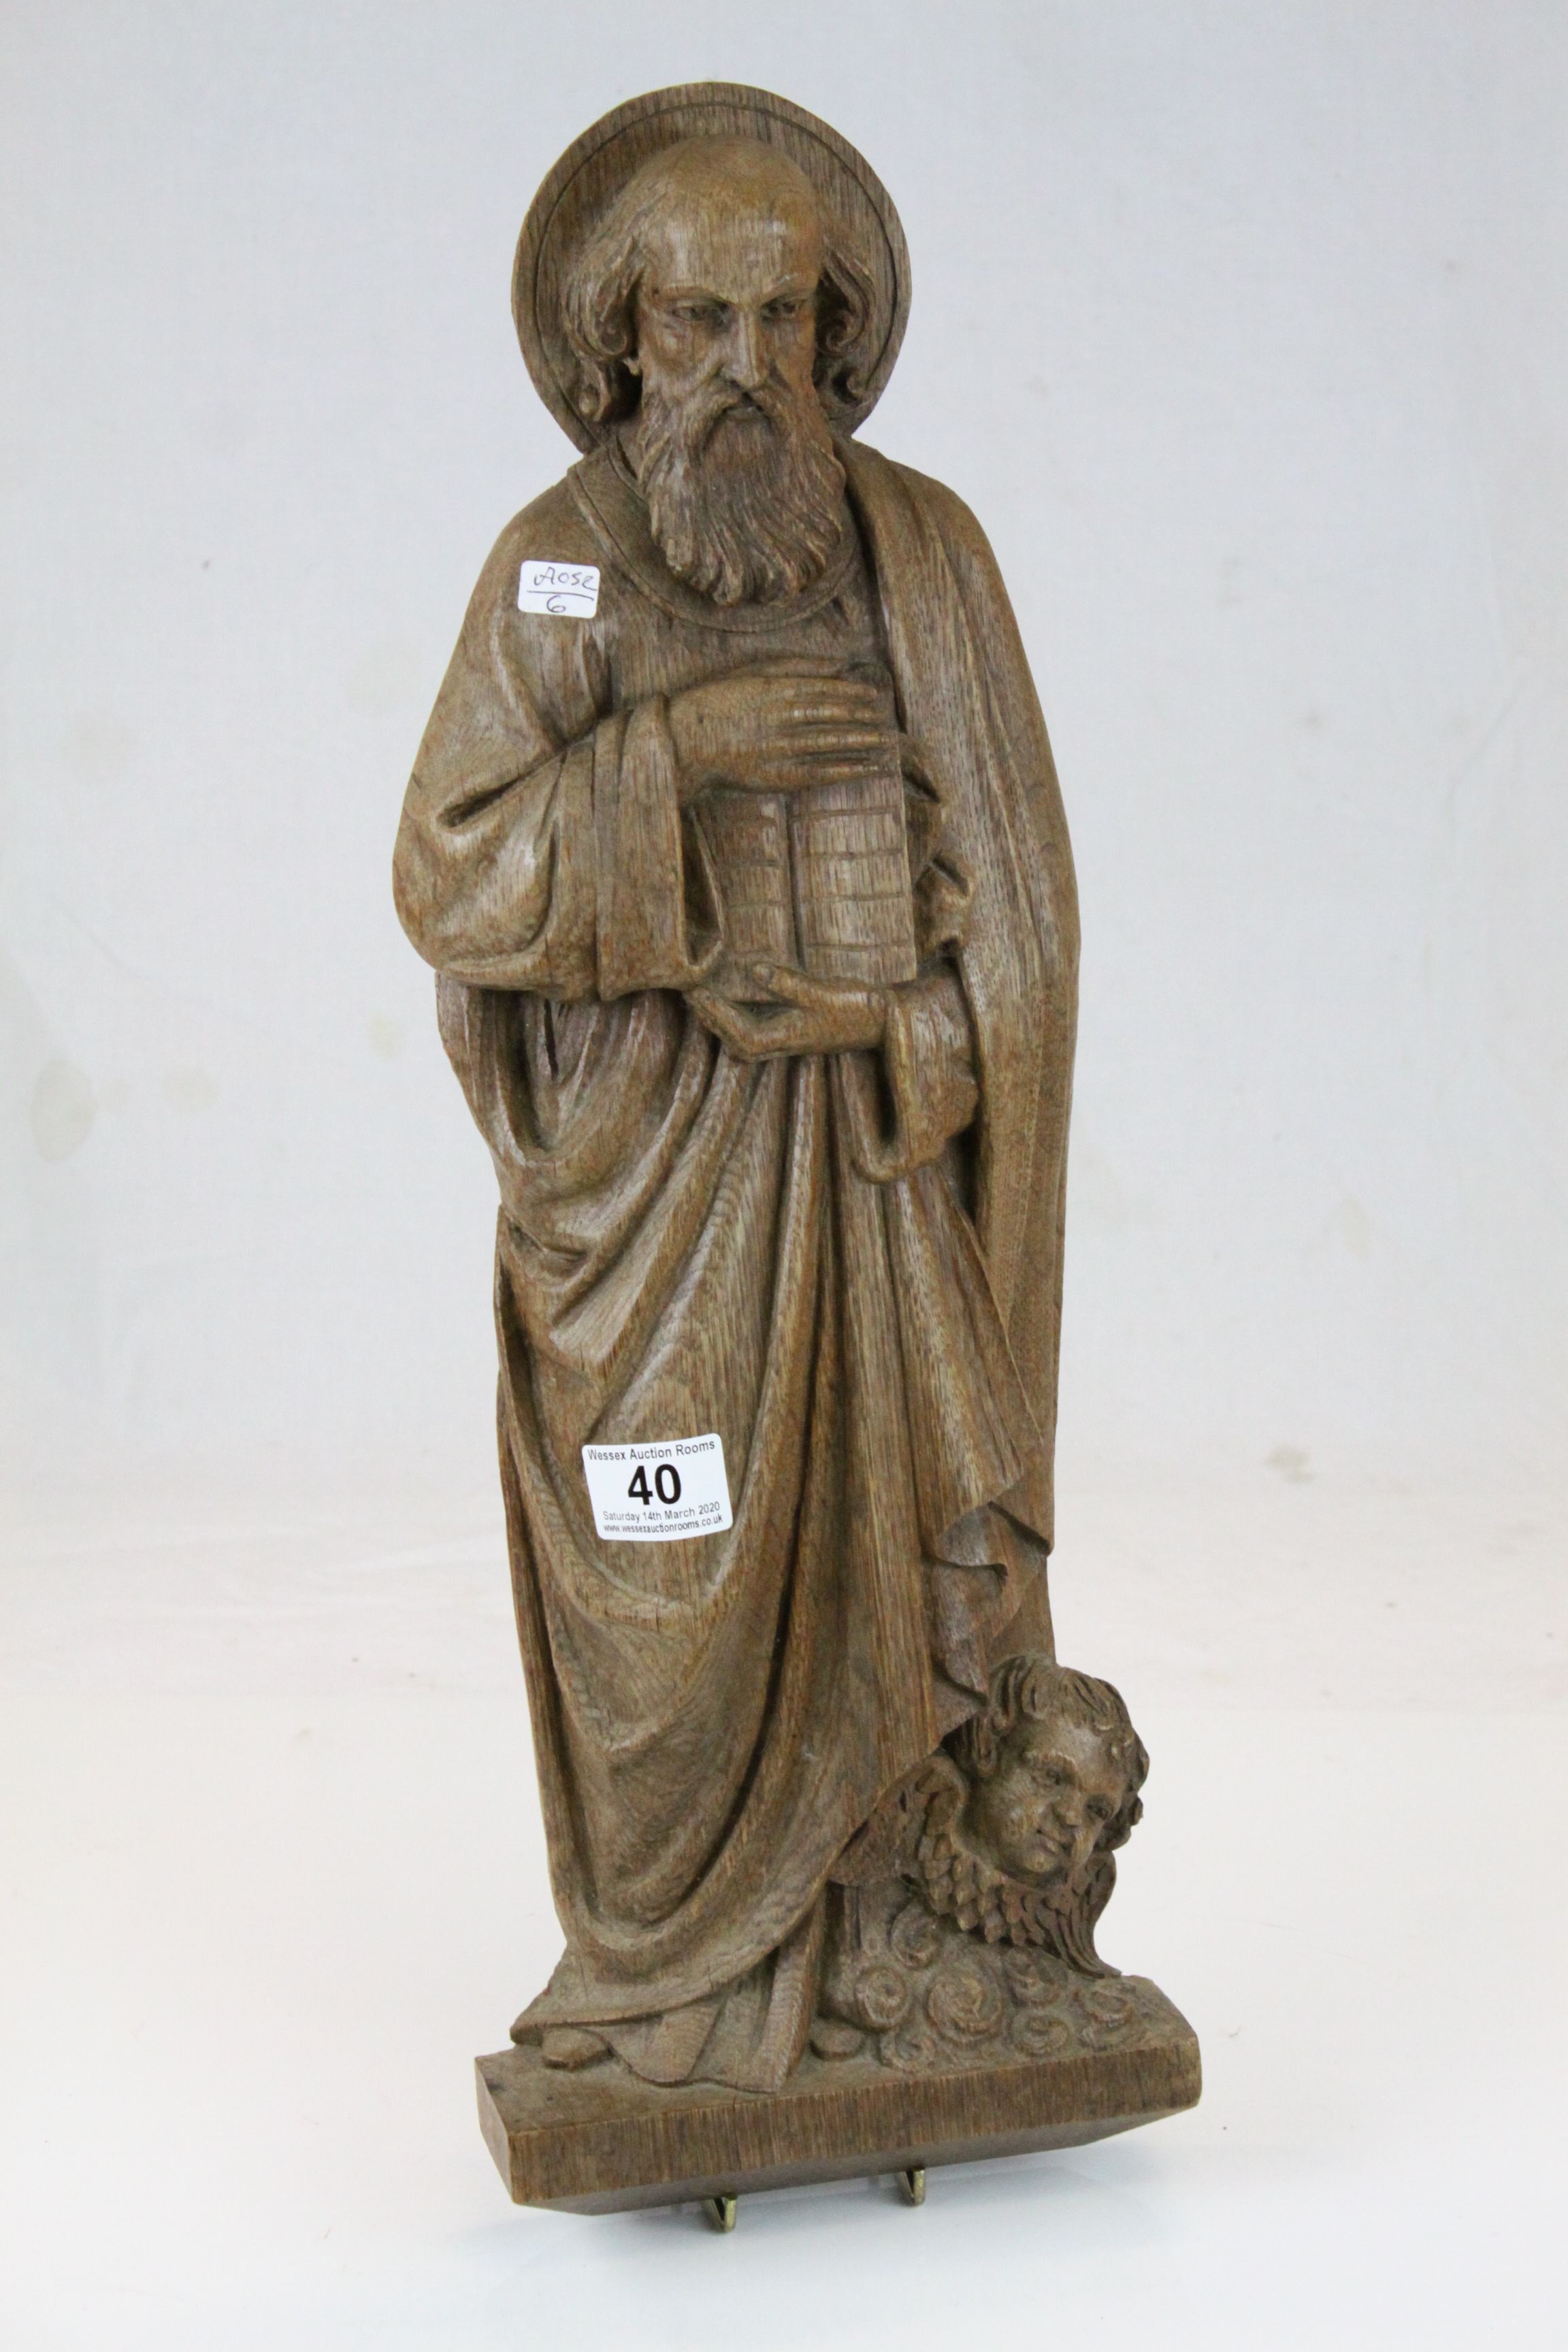 Victorian well carved oak figure of a Christian Saint